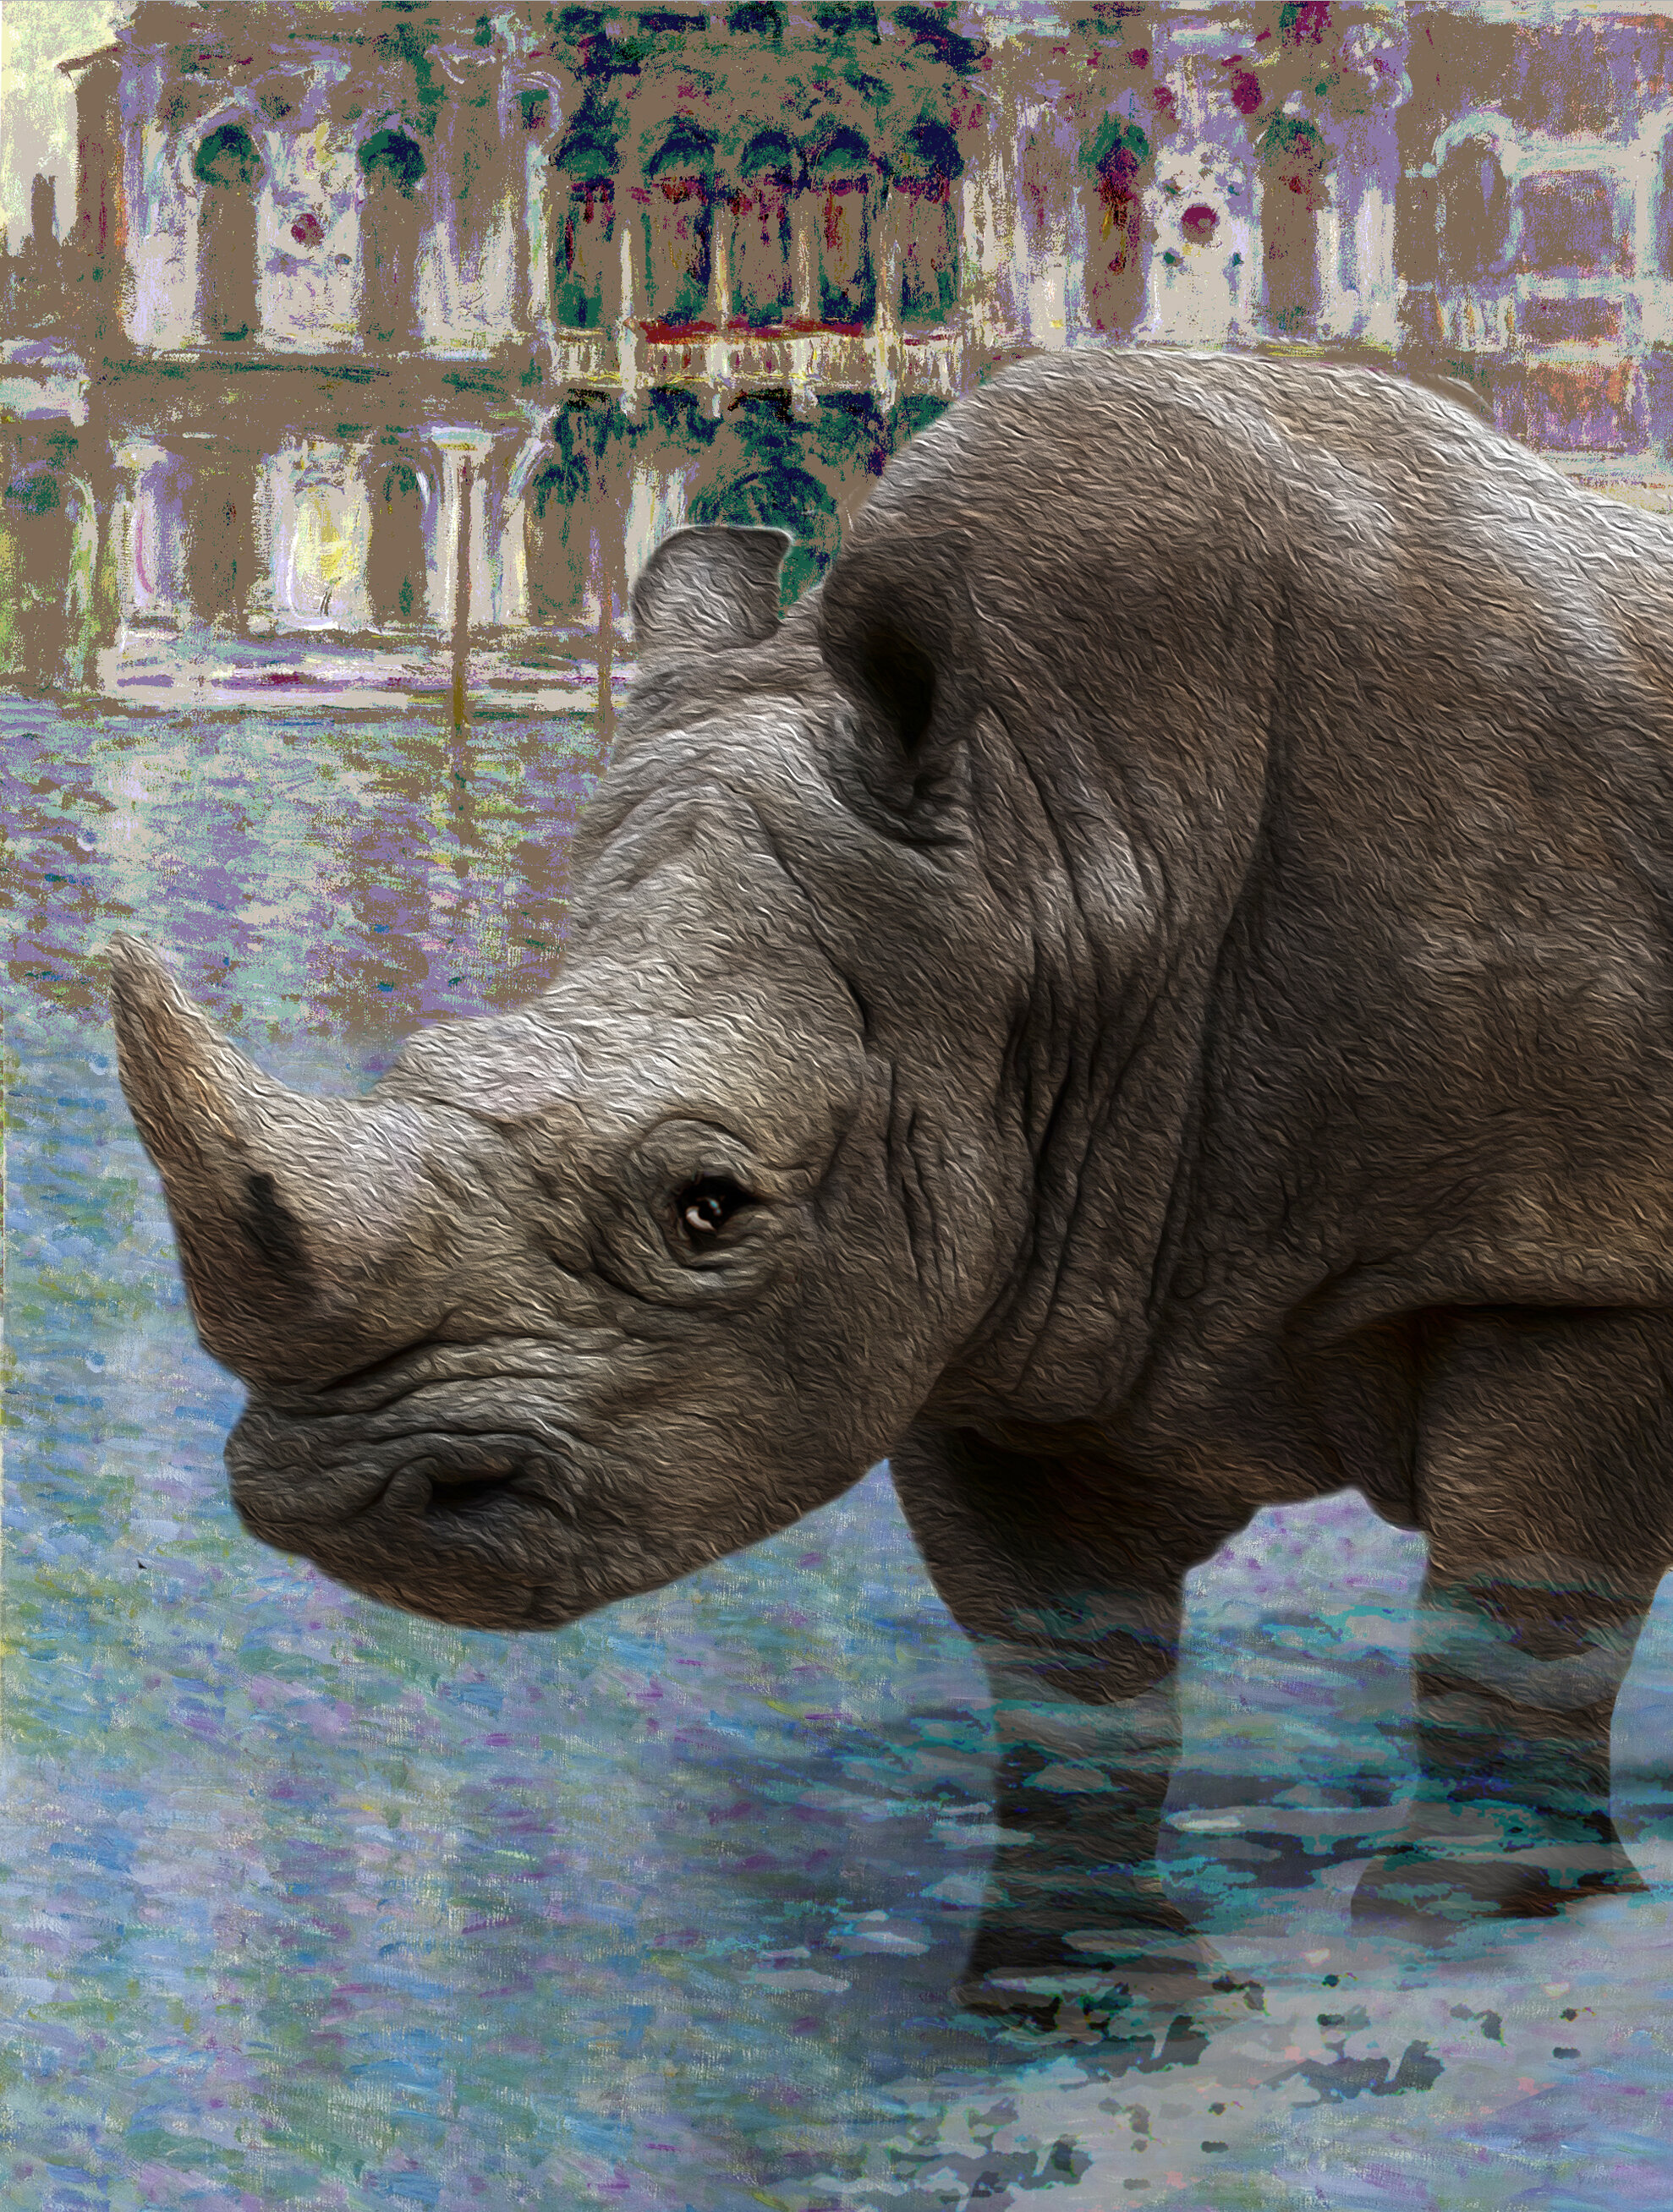 The Rhino and Venice